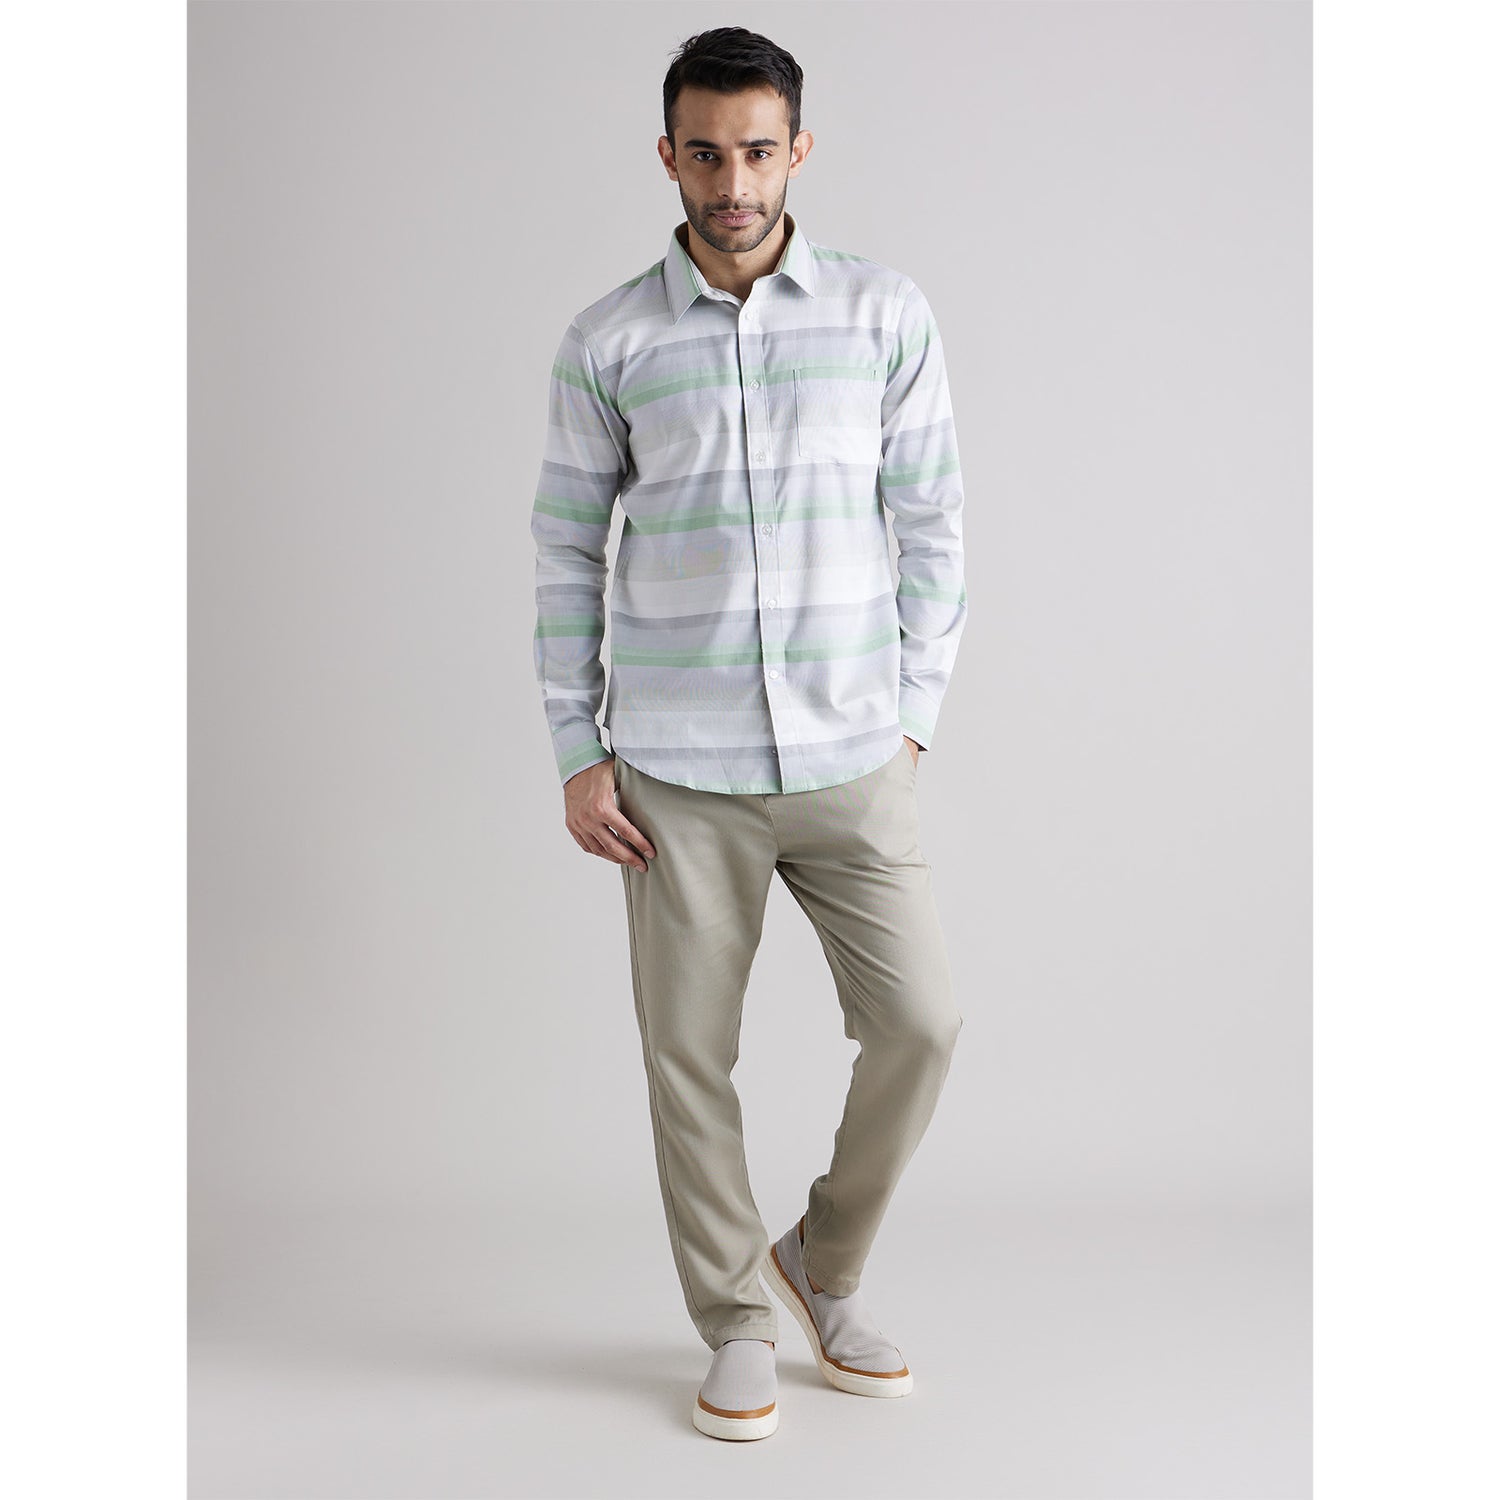 Green Cotton Classic Horizontal Stripes Casual Shirt (CAPRESTRIPE)